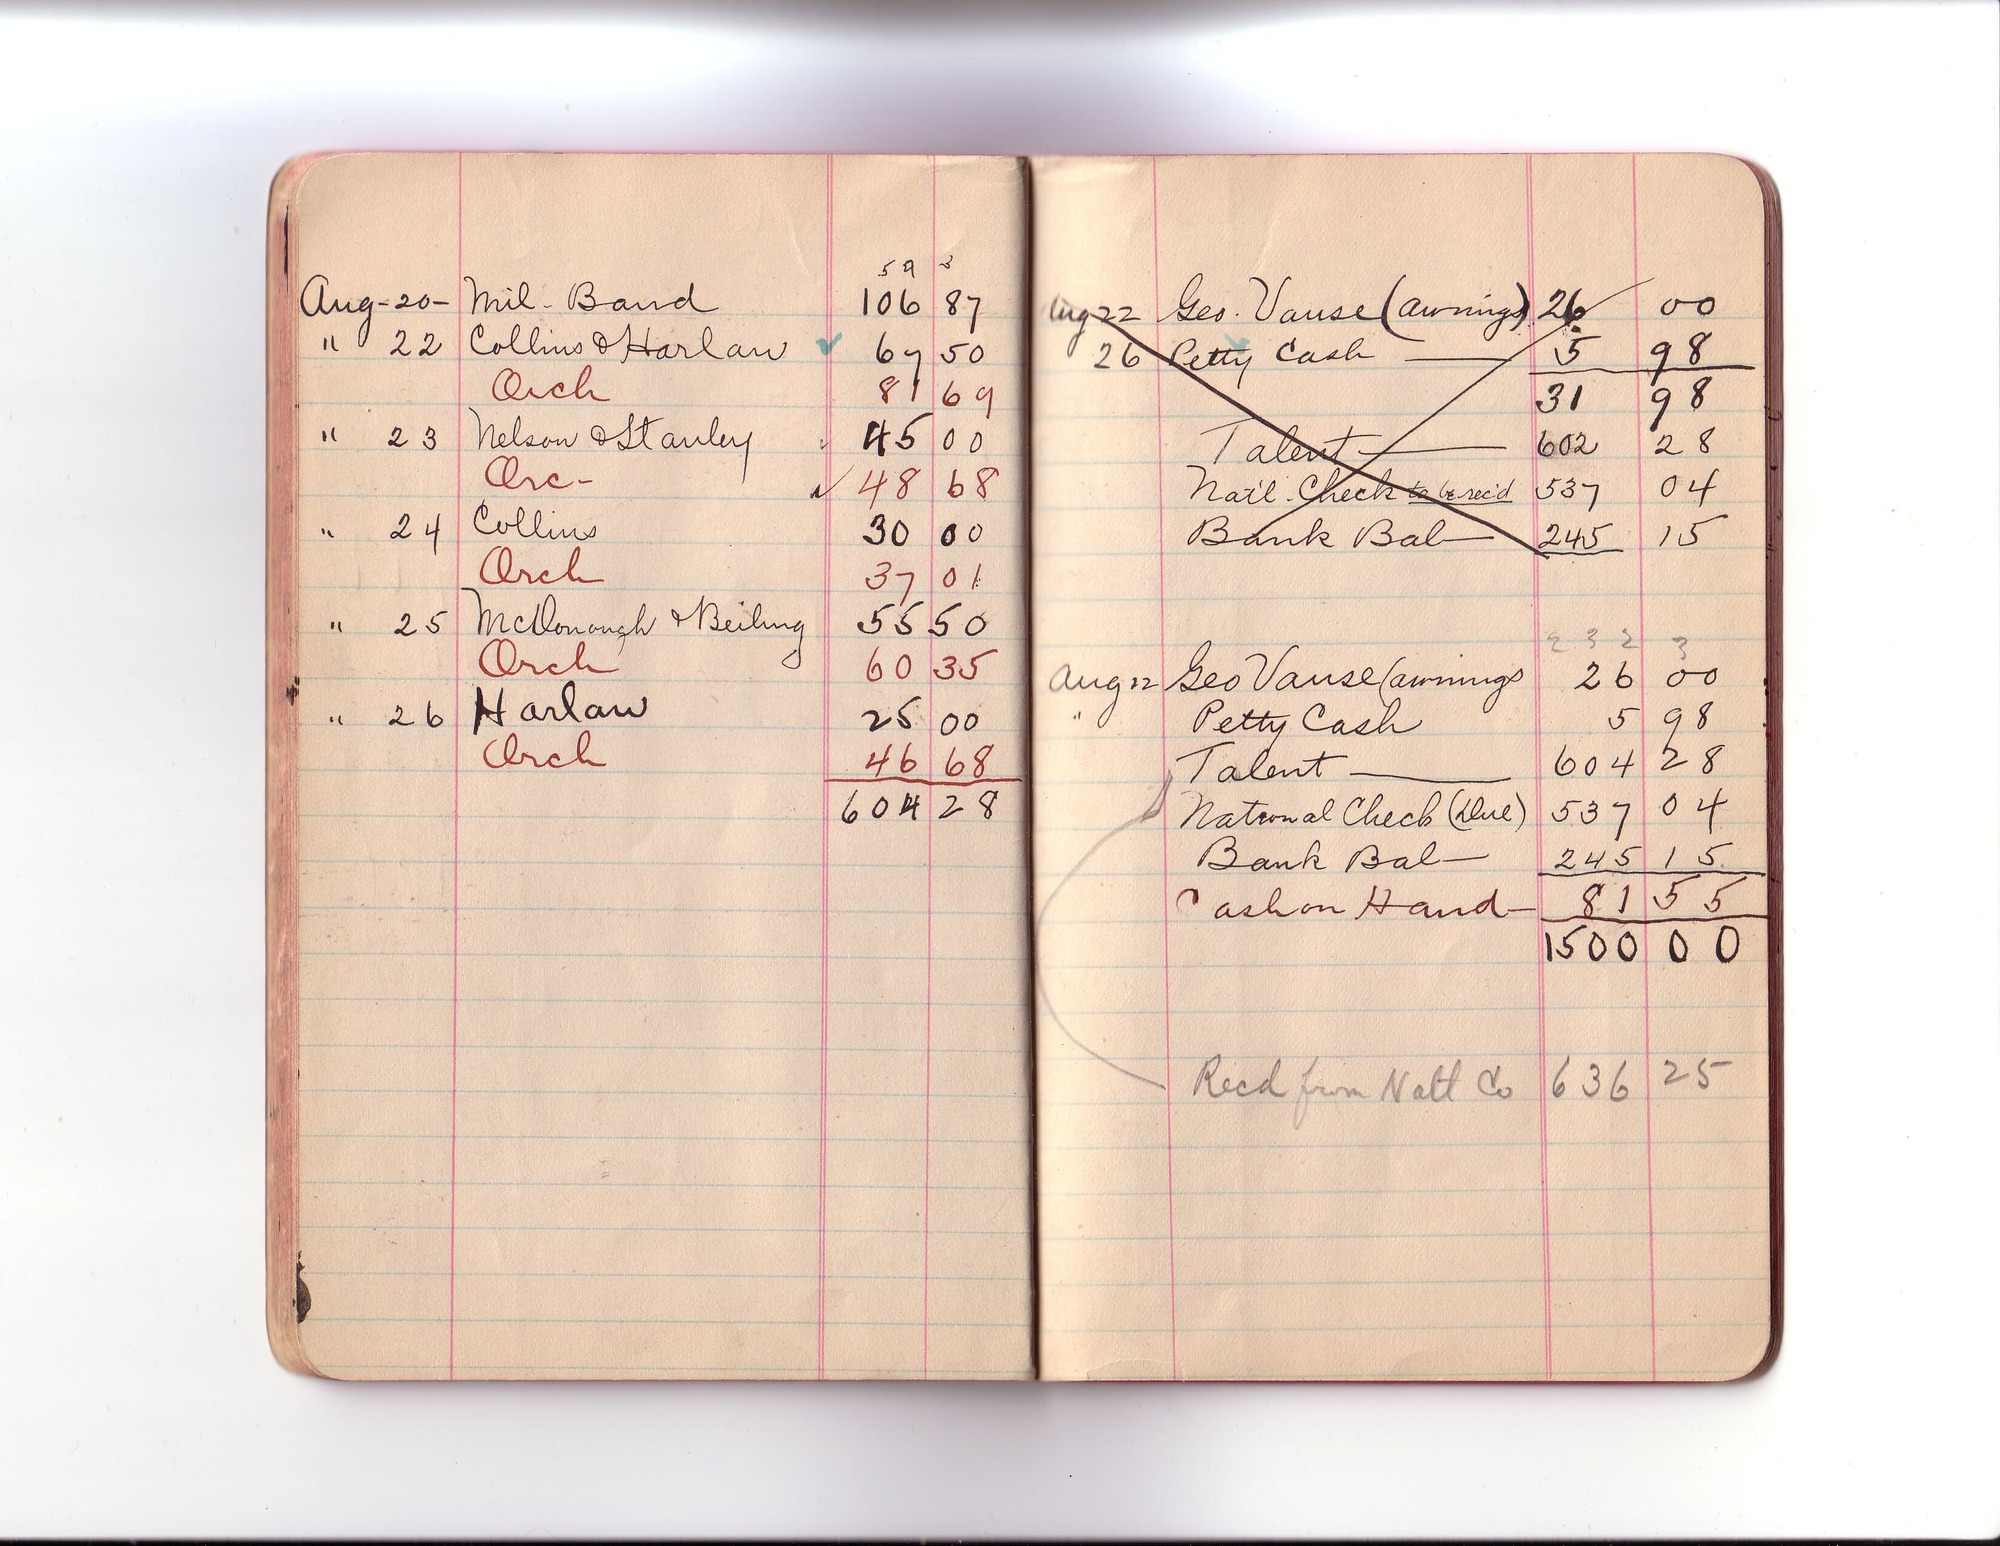 Thomas Edison's New York City Recording Studio Cash Book 01 (of 21), Image 24 (of 41).